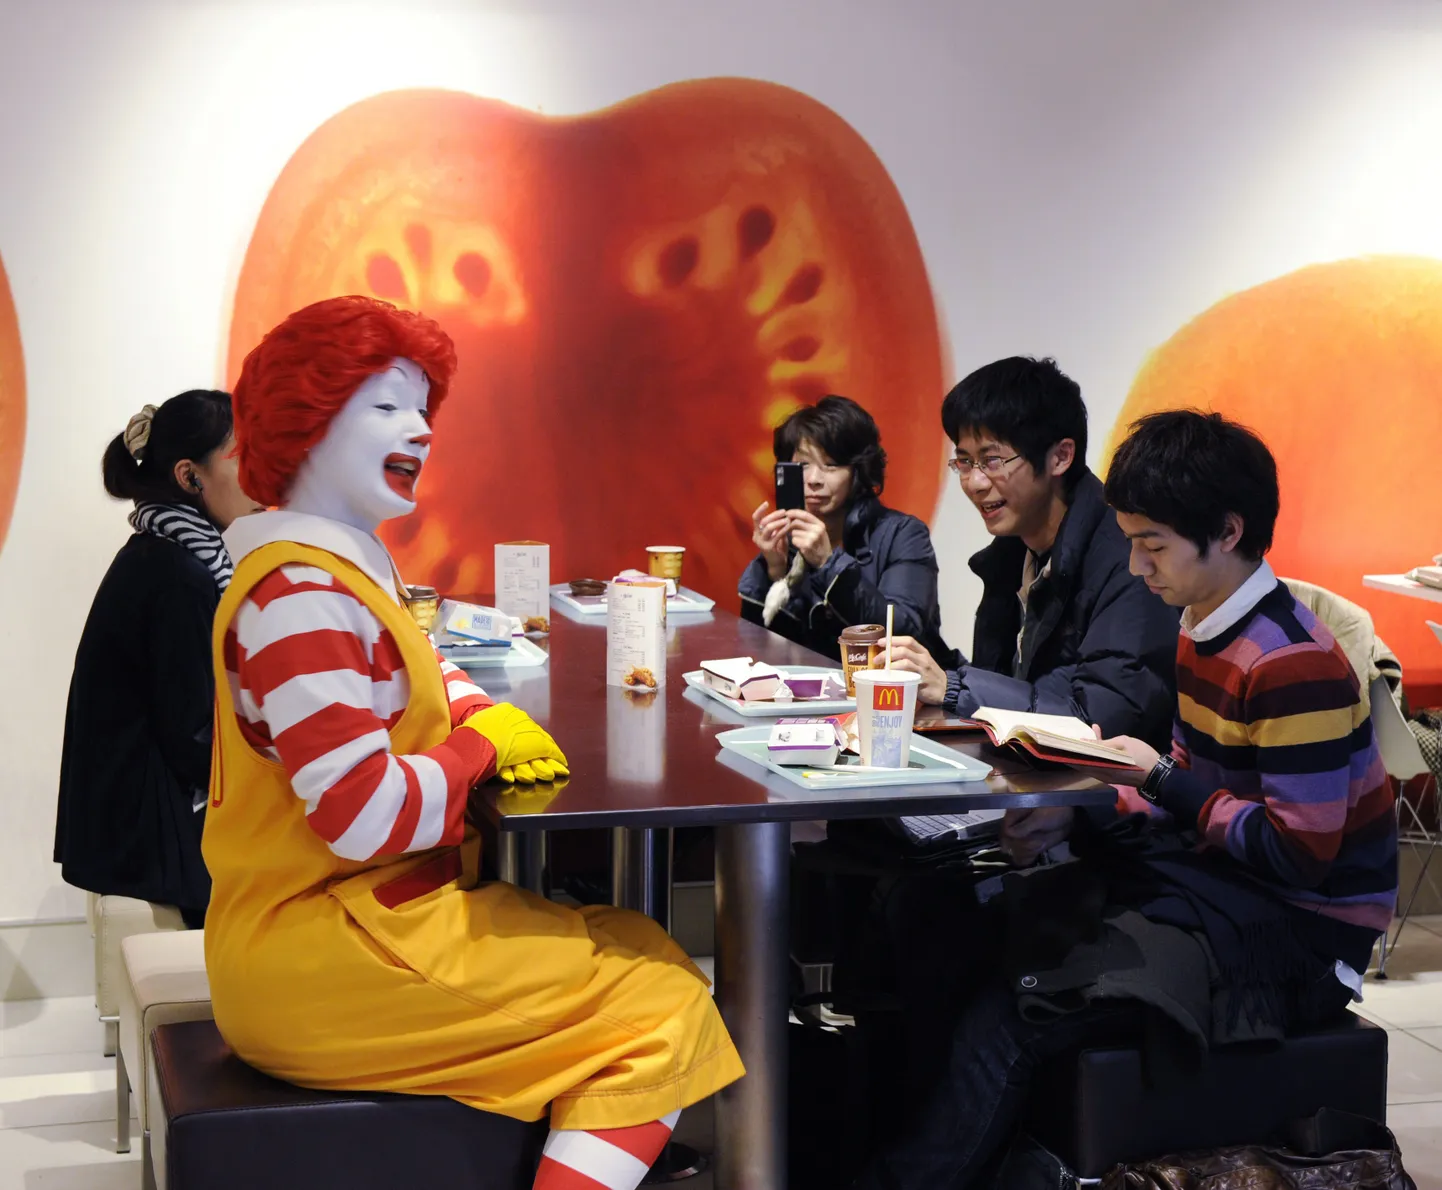 Ronald McDonald McDonald'si külastajatega juttu ajamas.